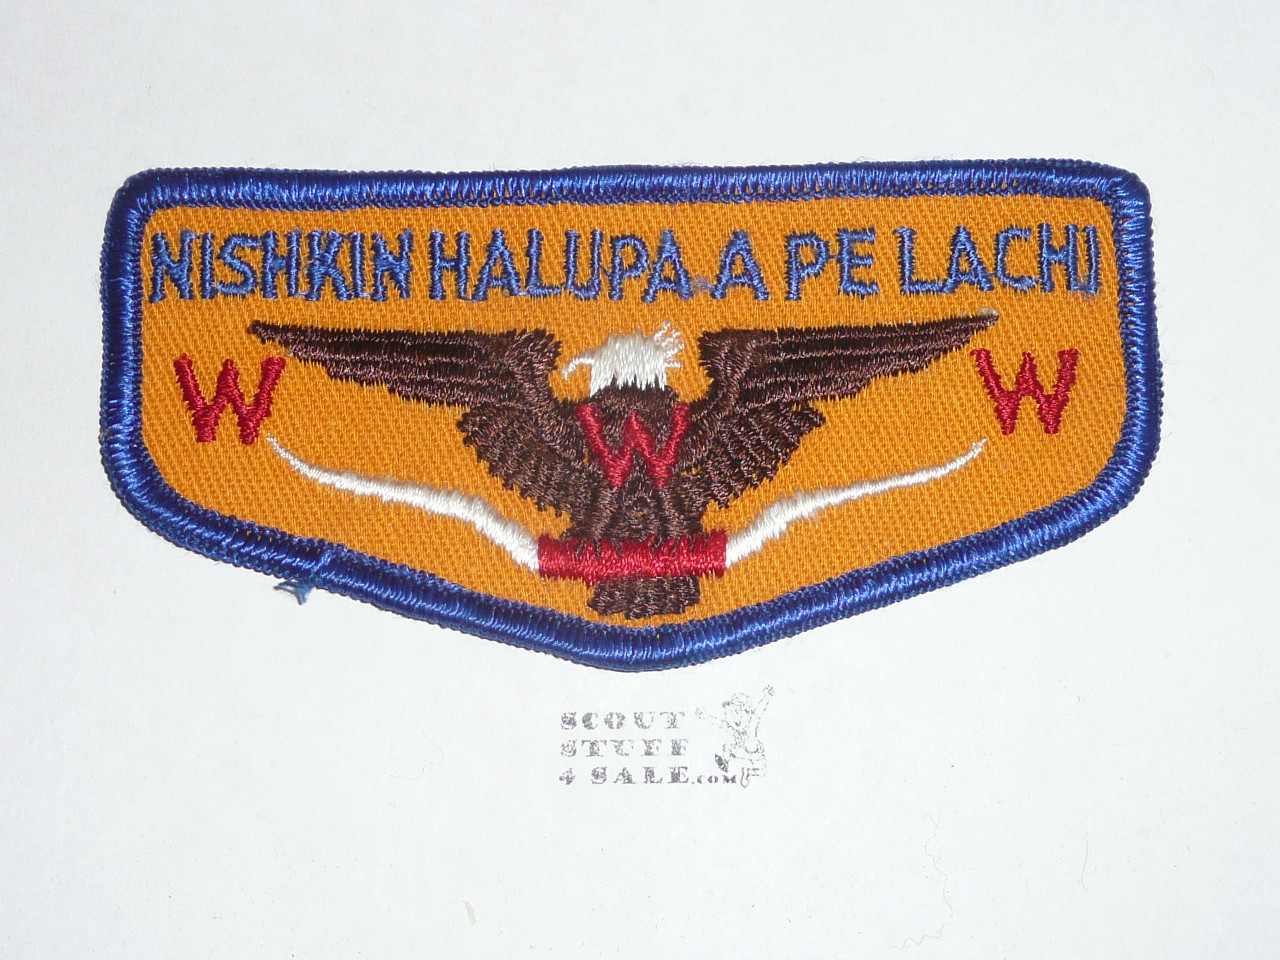 Order of the Arrow Lodge #489 Nishkin Halupa A Pe Lachi f4 Flap Patch